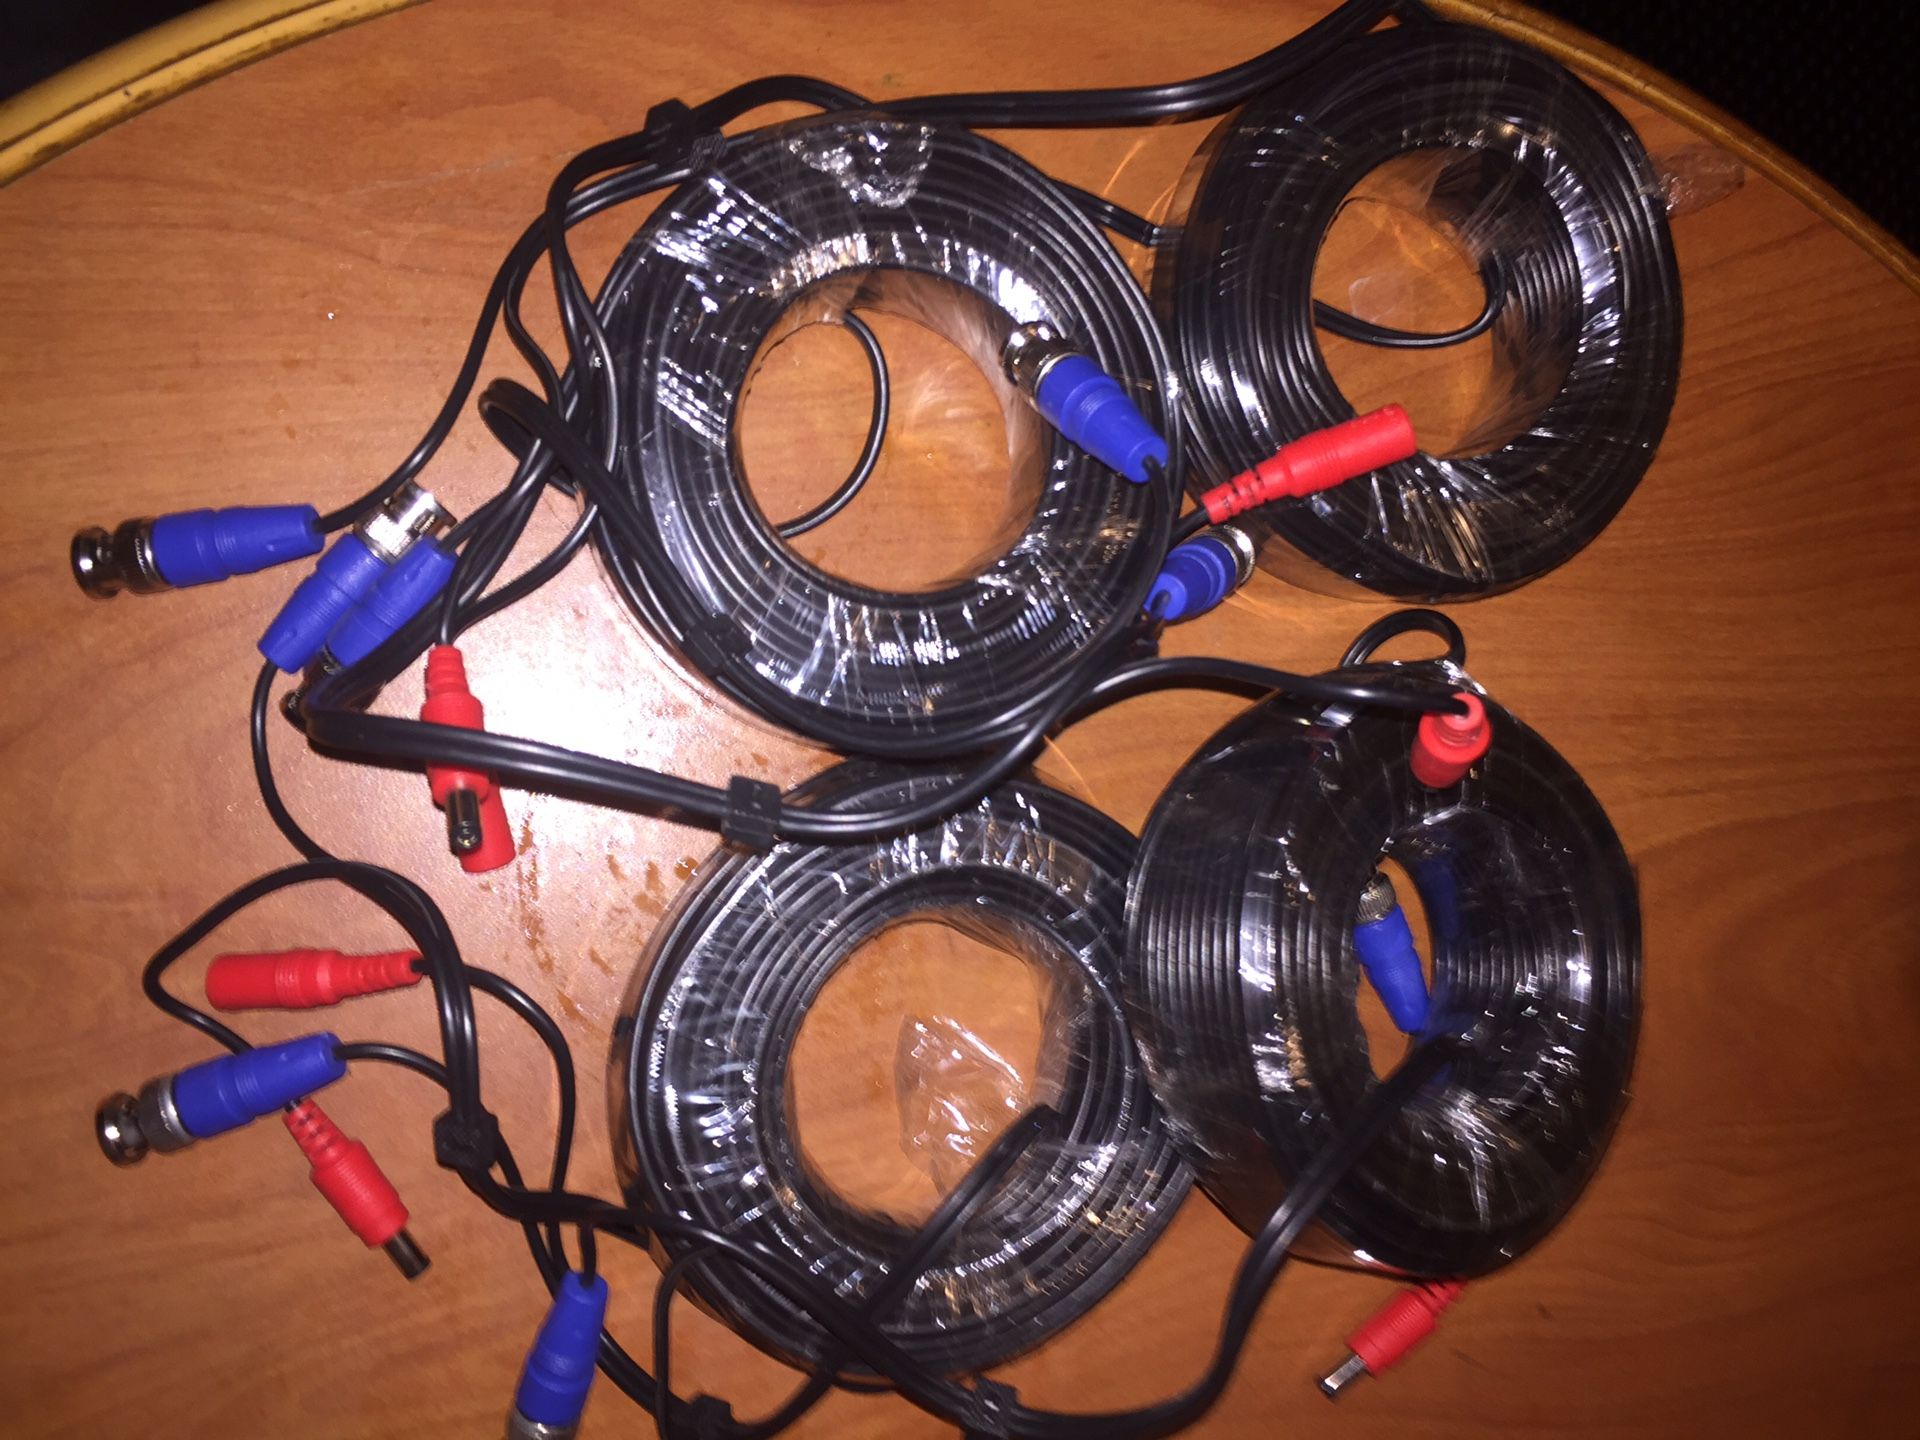 4-50ft bnc cables black $25